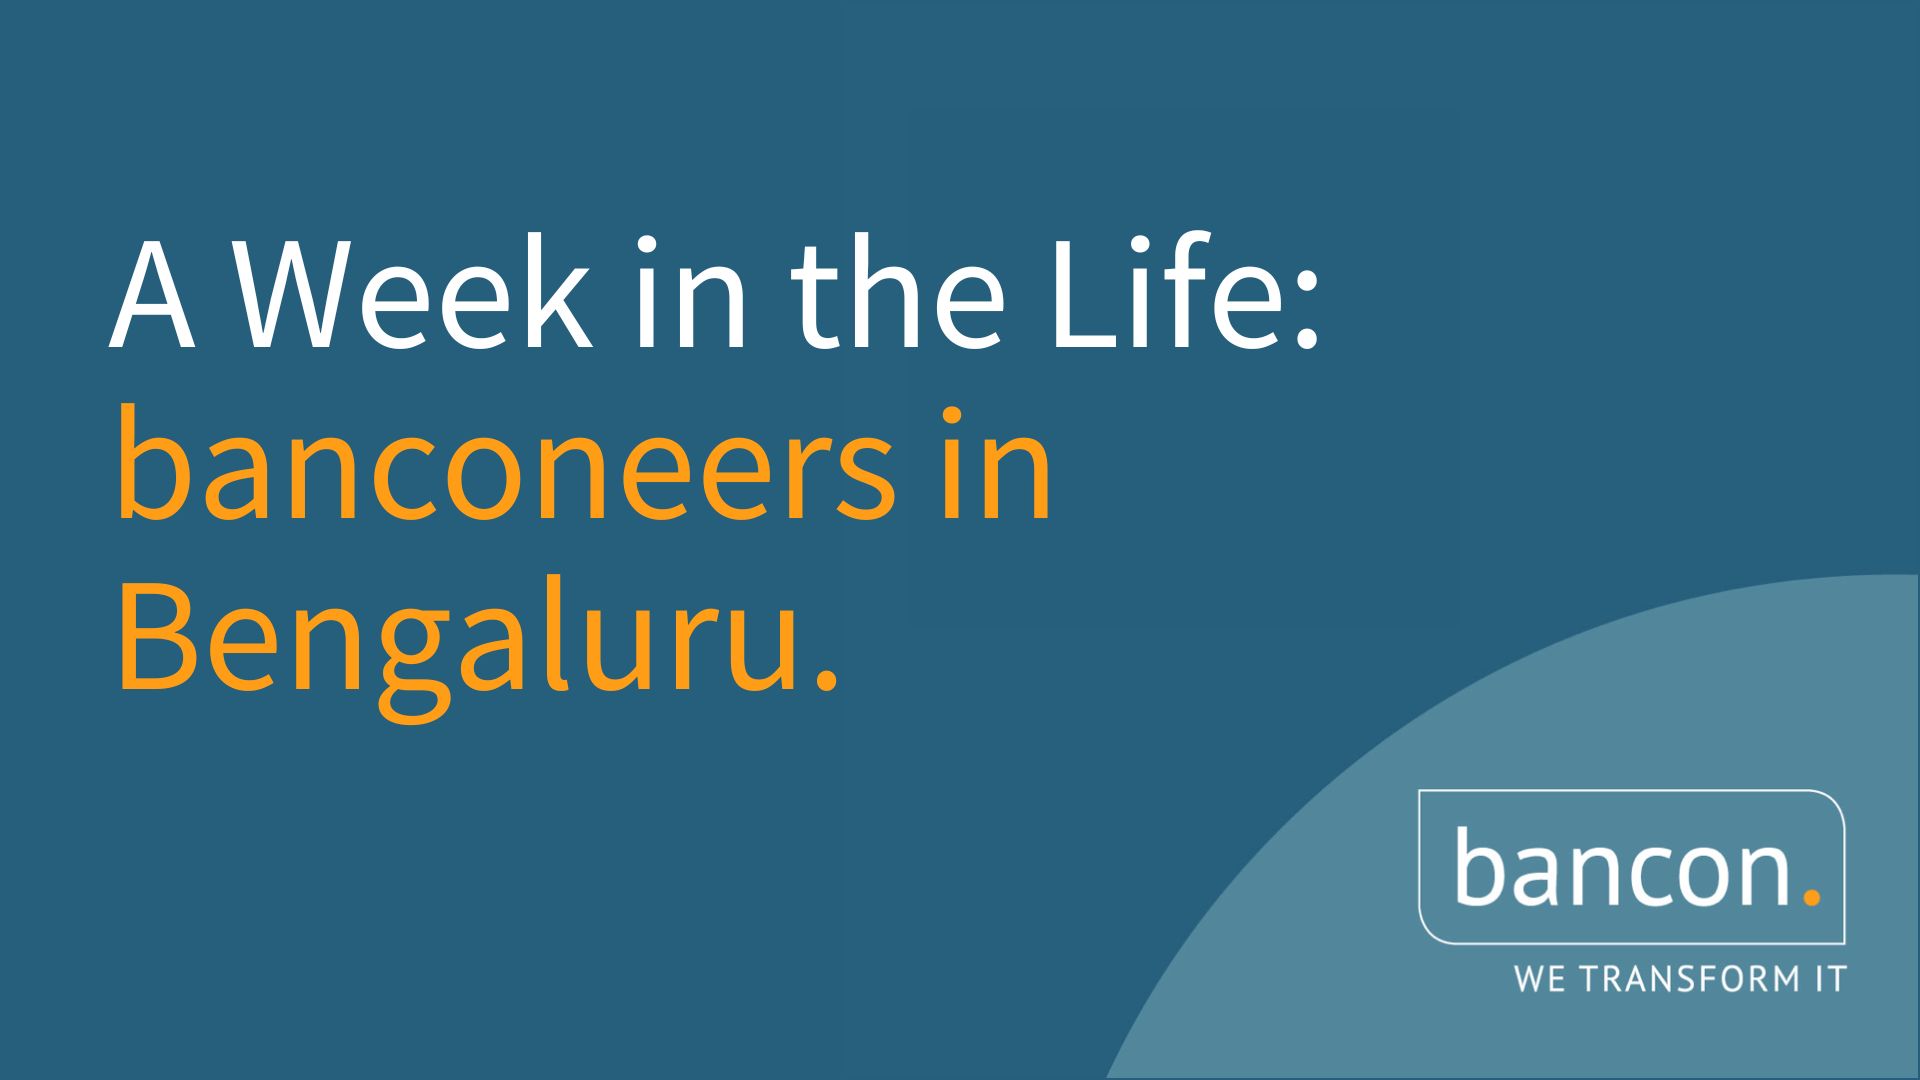 A Week in the Life: banconeers in Bengaluru 